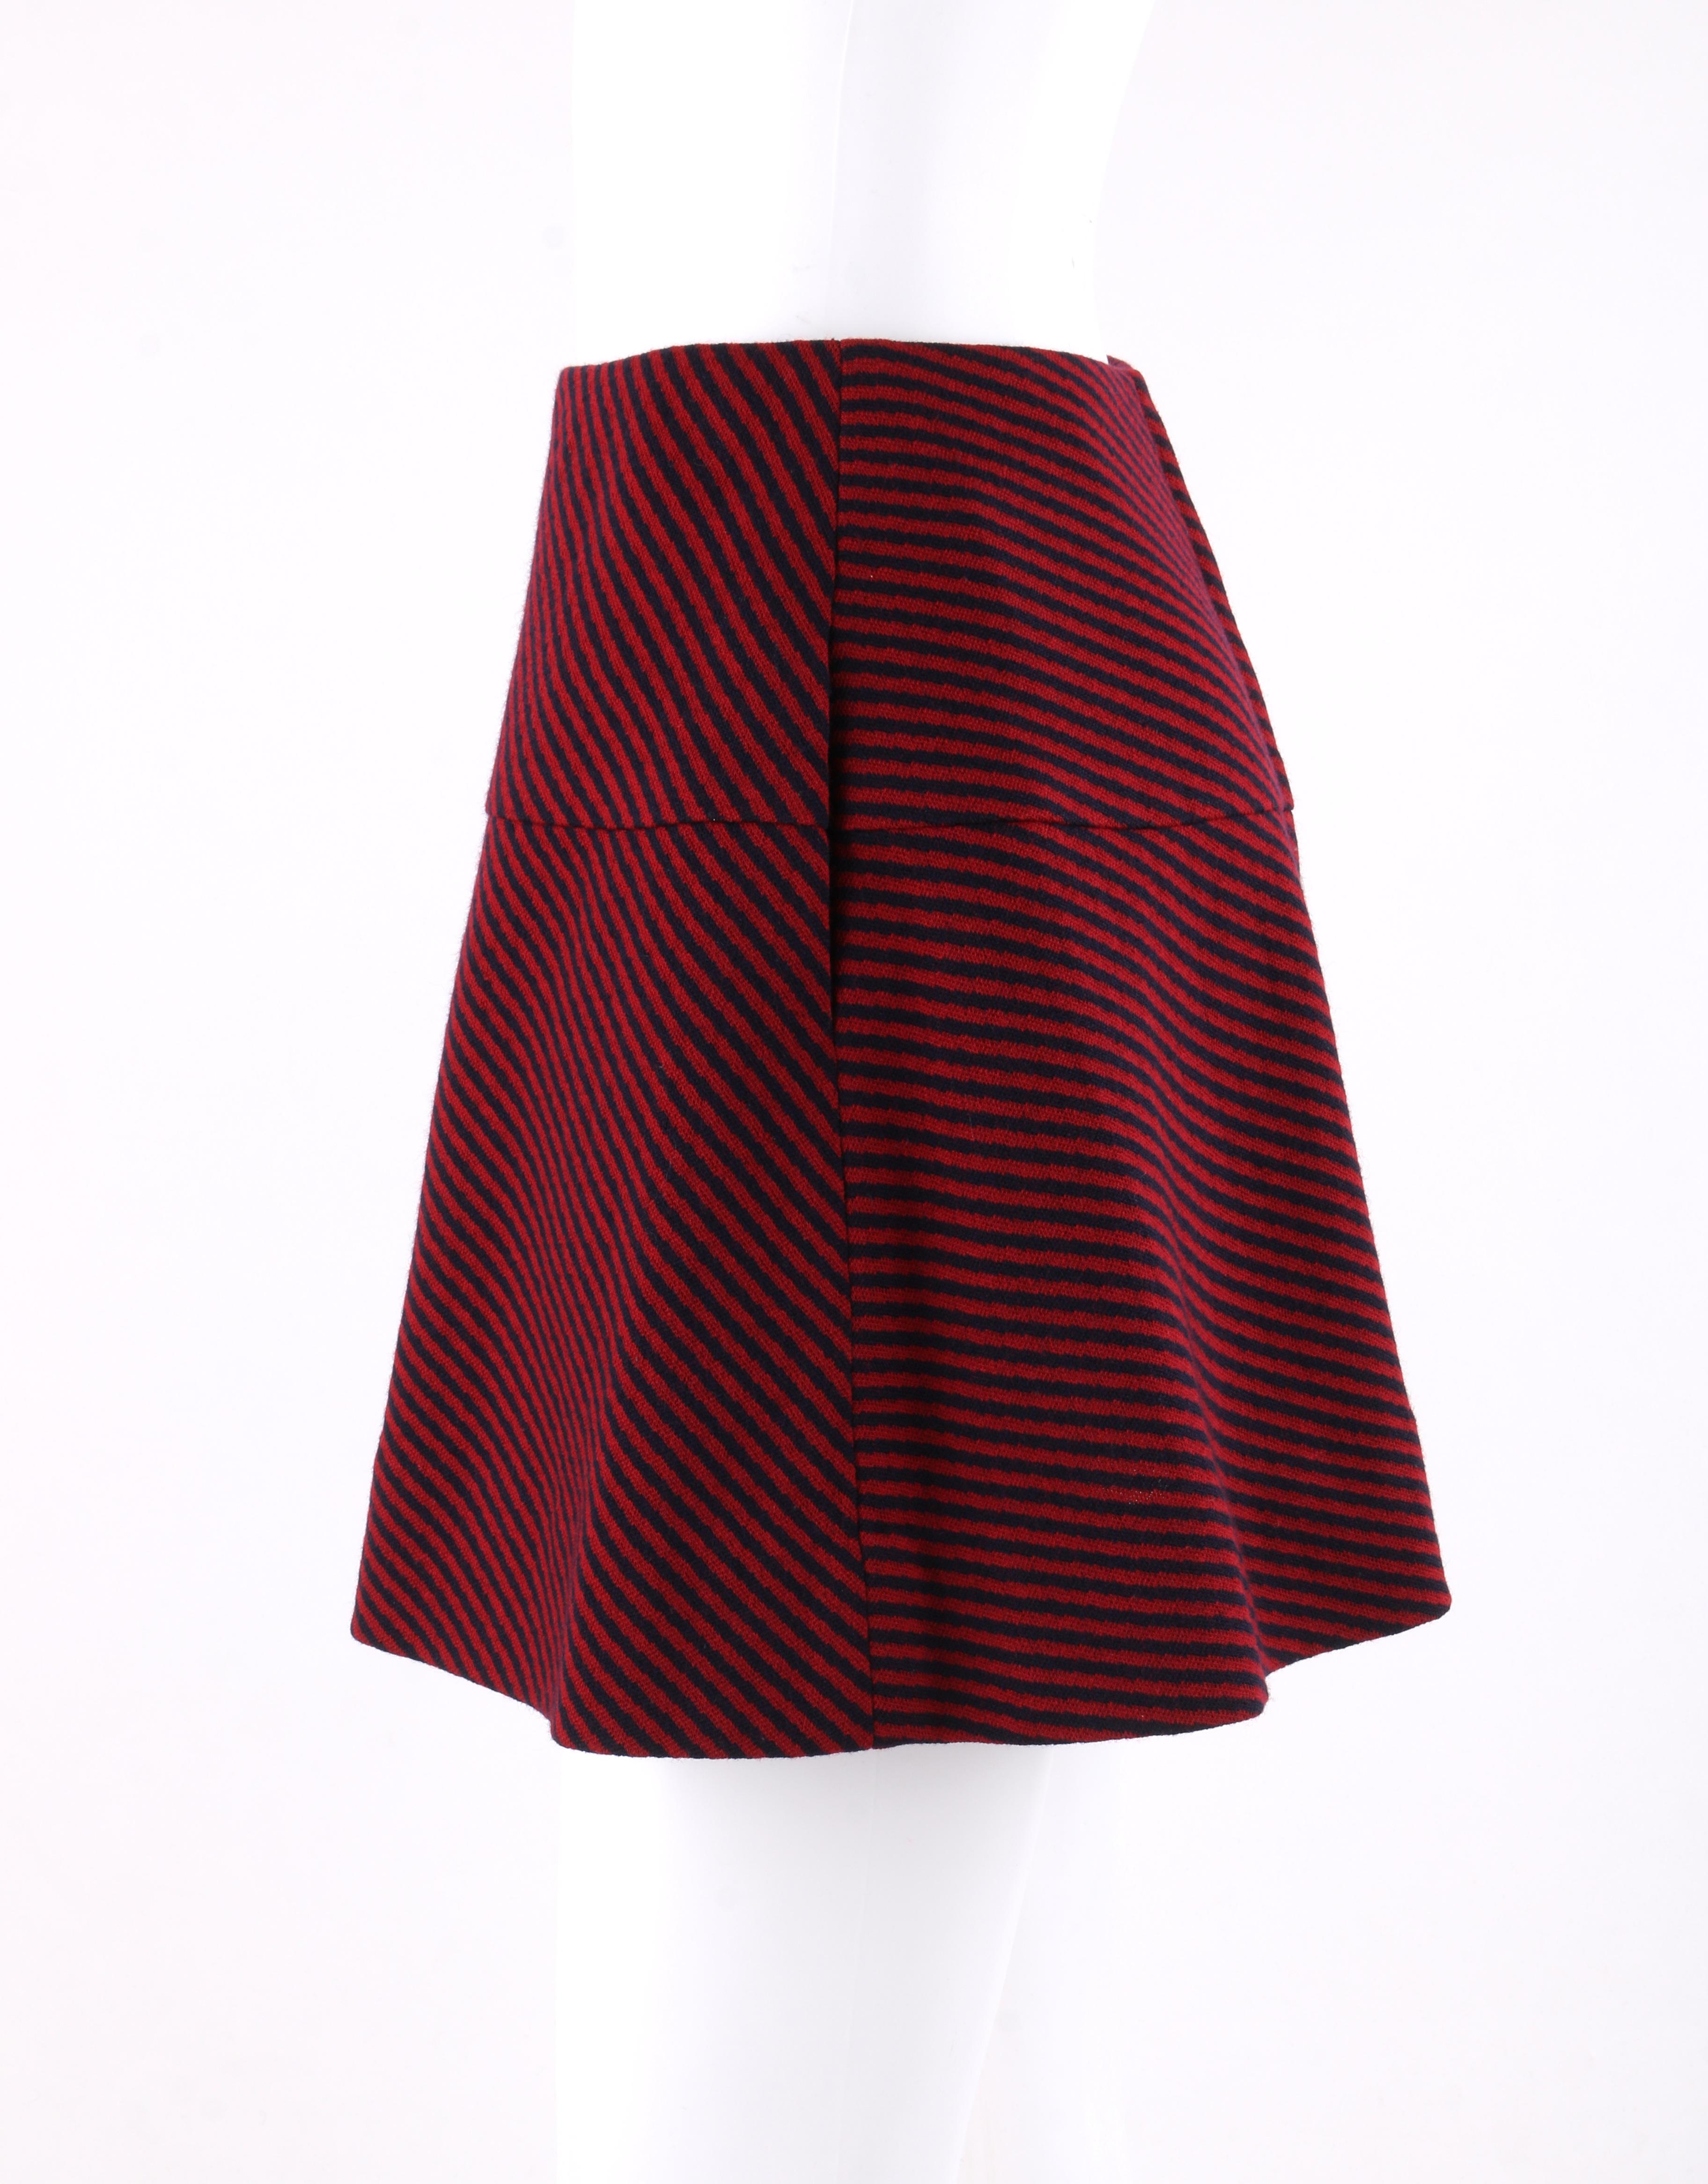 RUDI GERNREICH Harmon Knitwear c.1960's 2pc Raised Knit Stripe Sweater Skirt Set For Sale 2